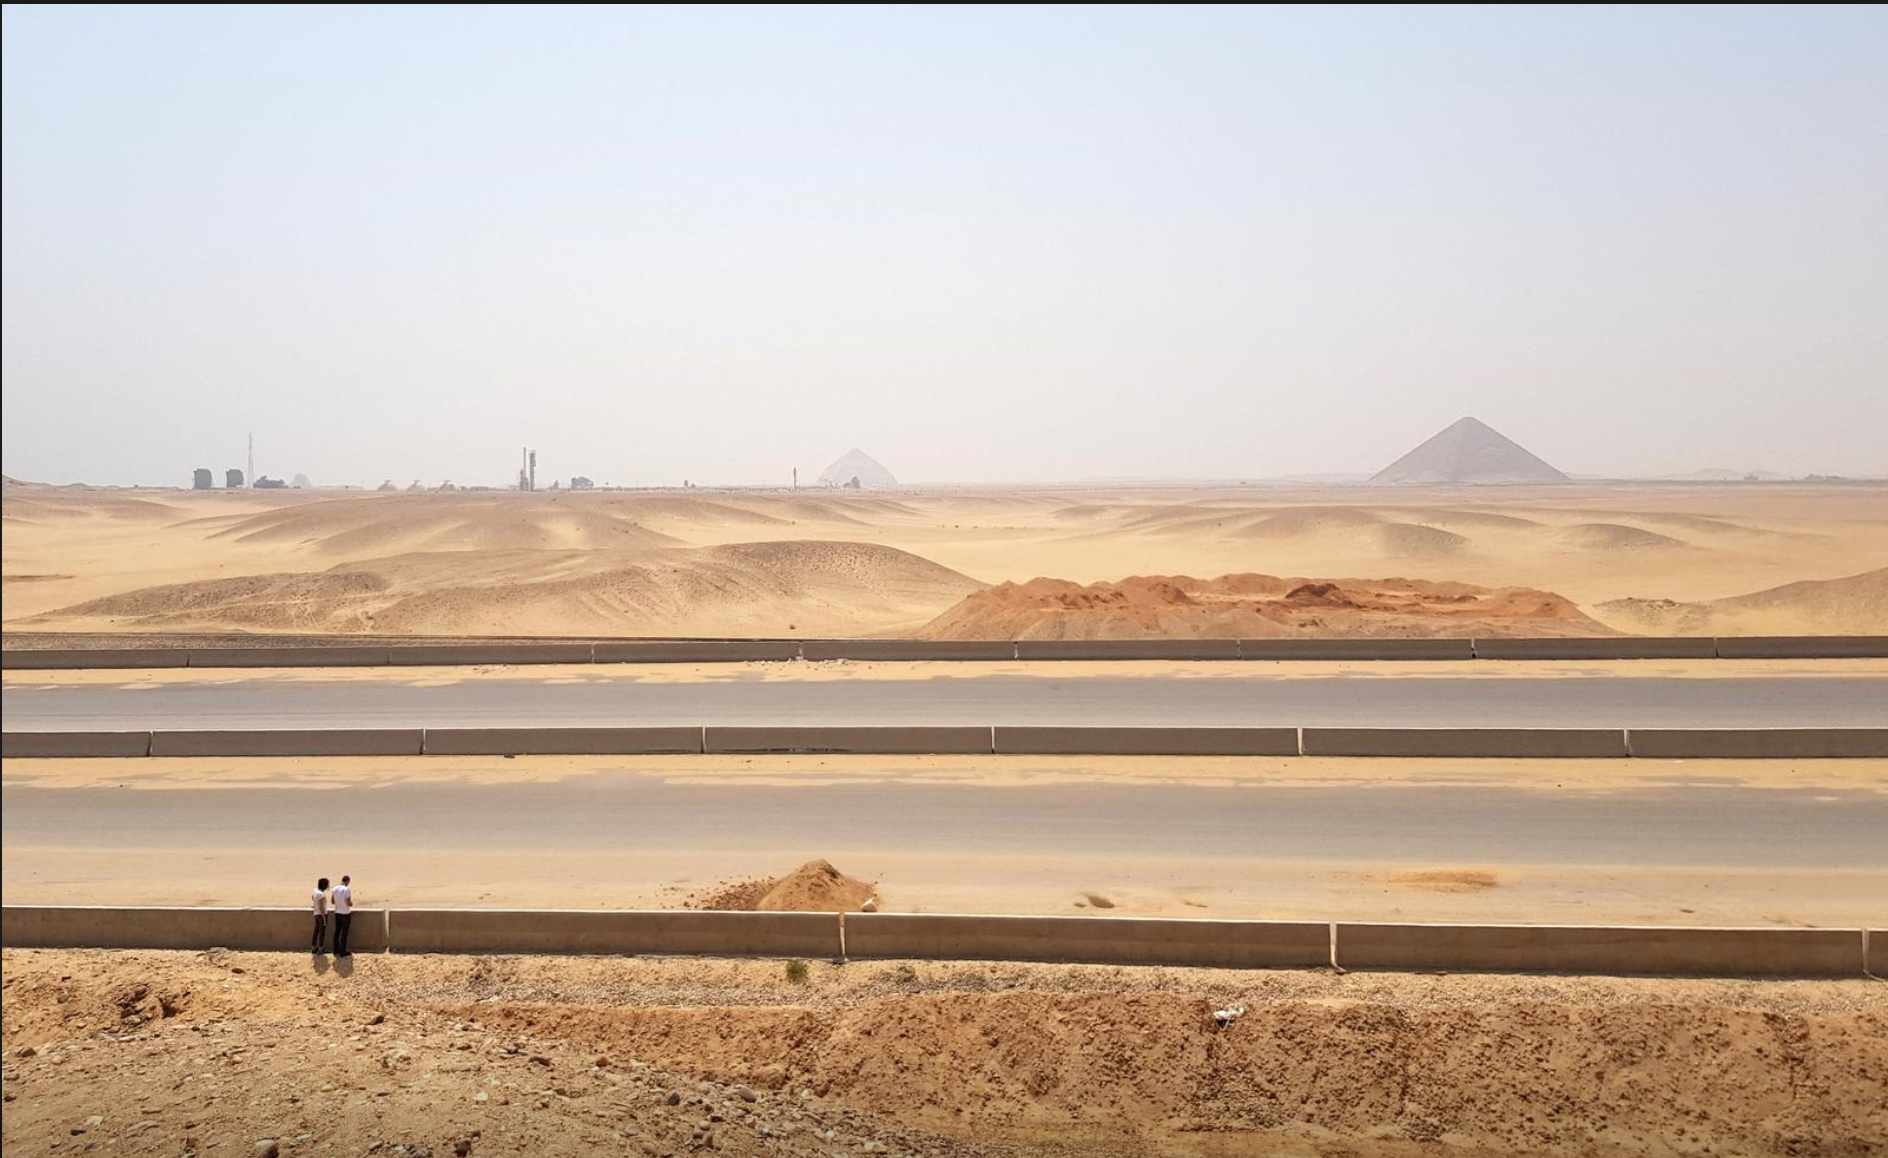 egypt plateau pyramids highways alarming